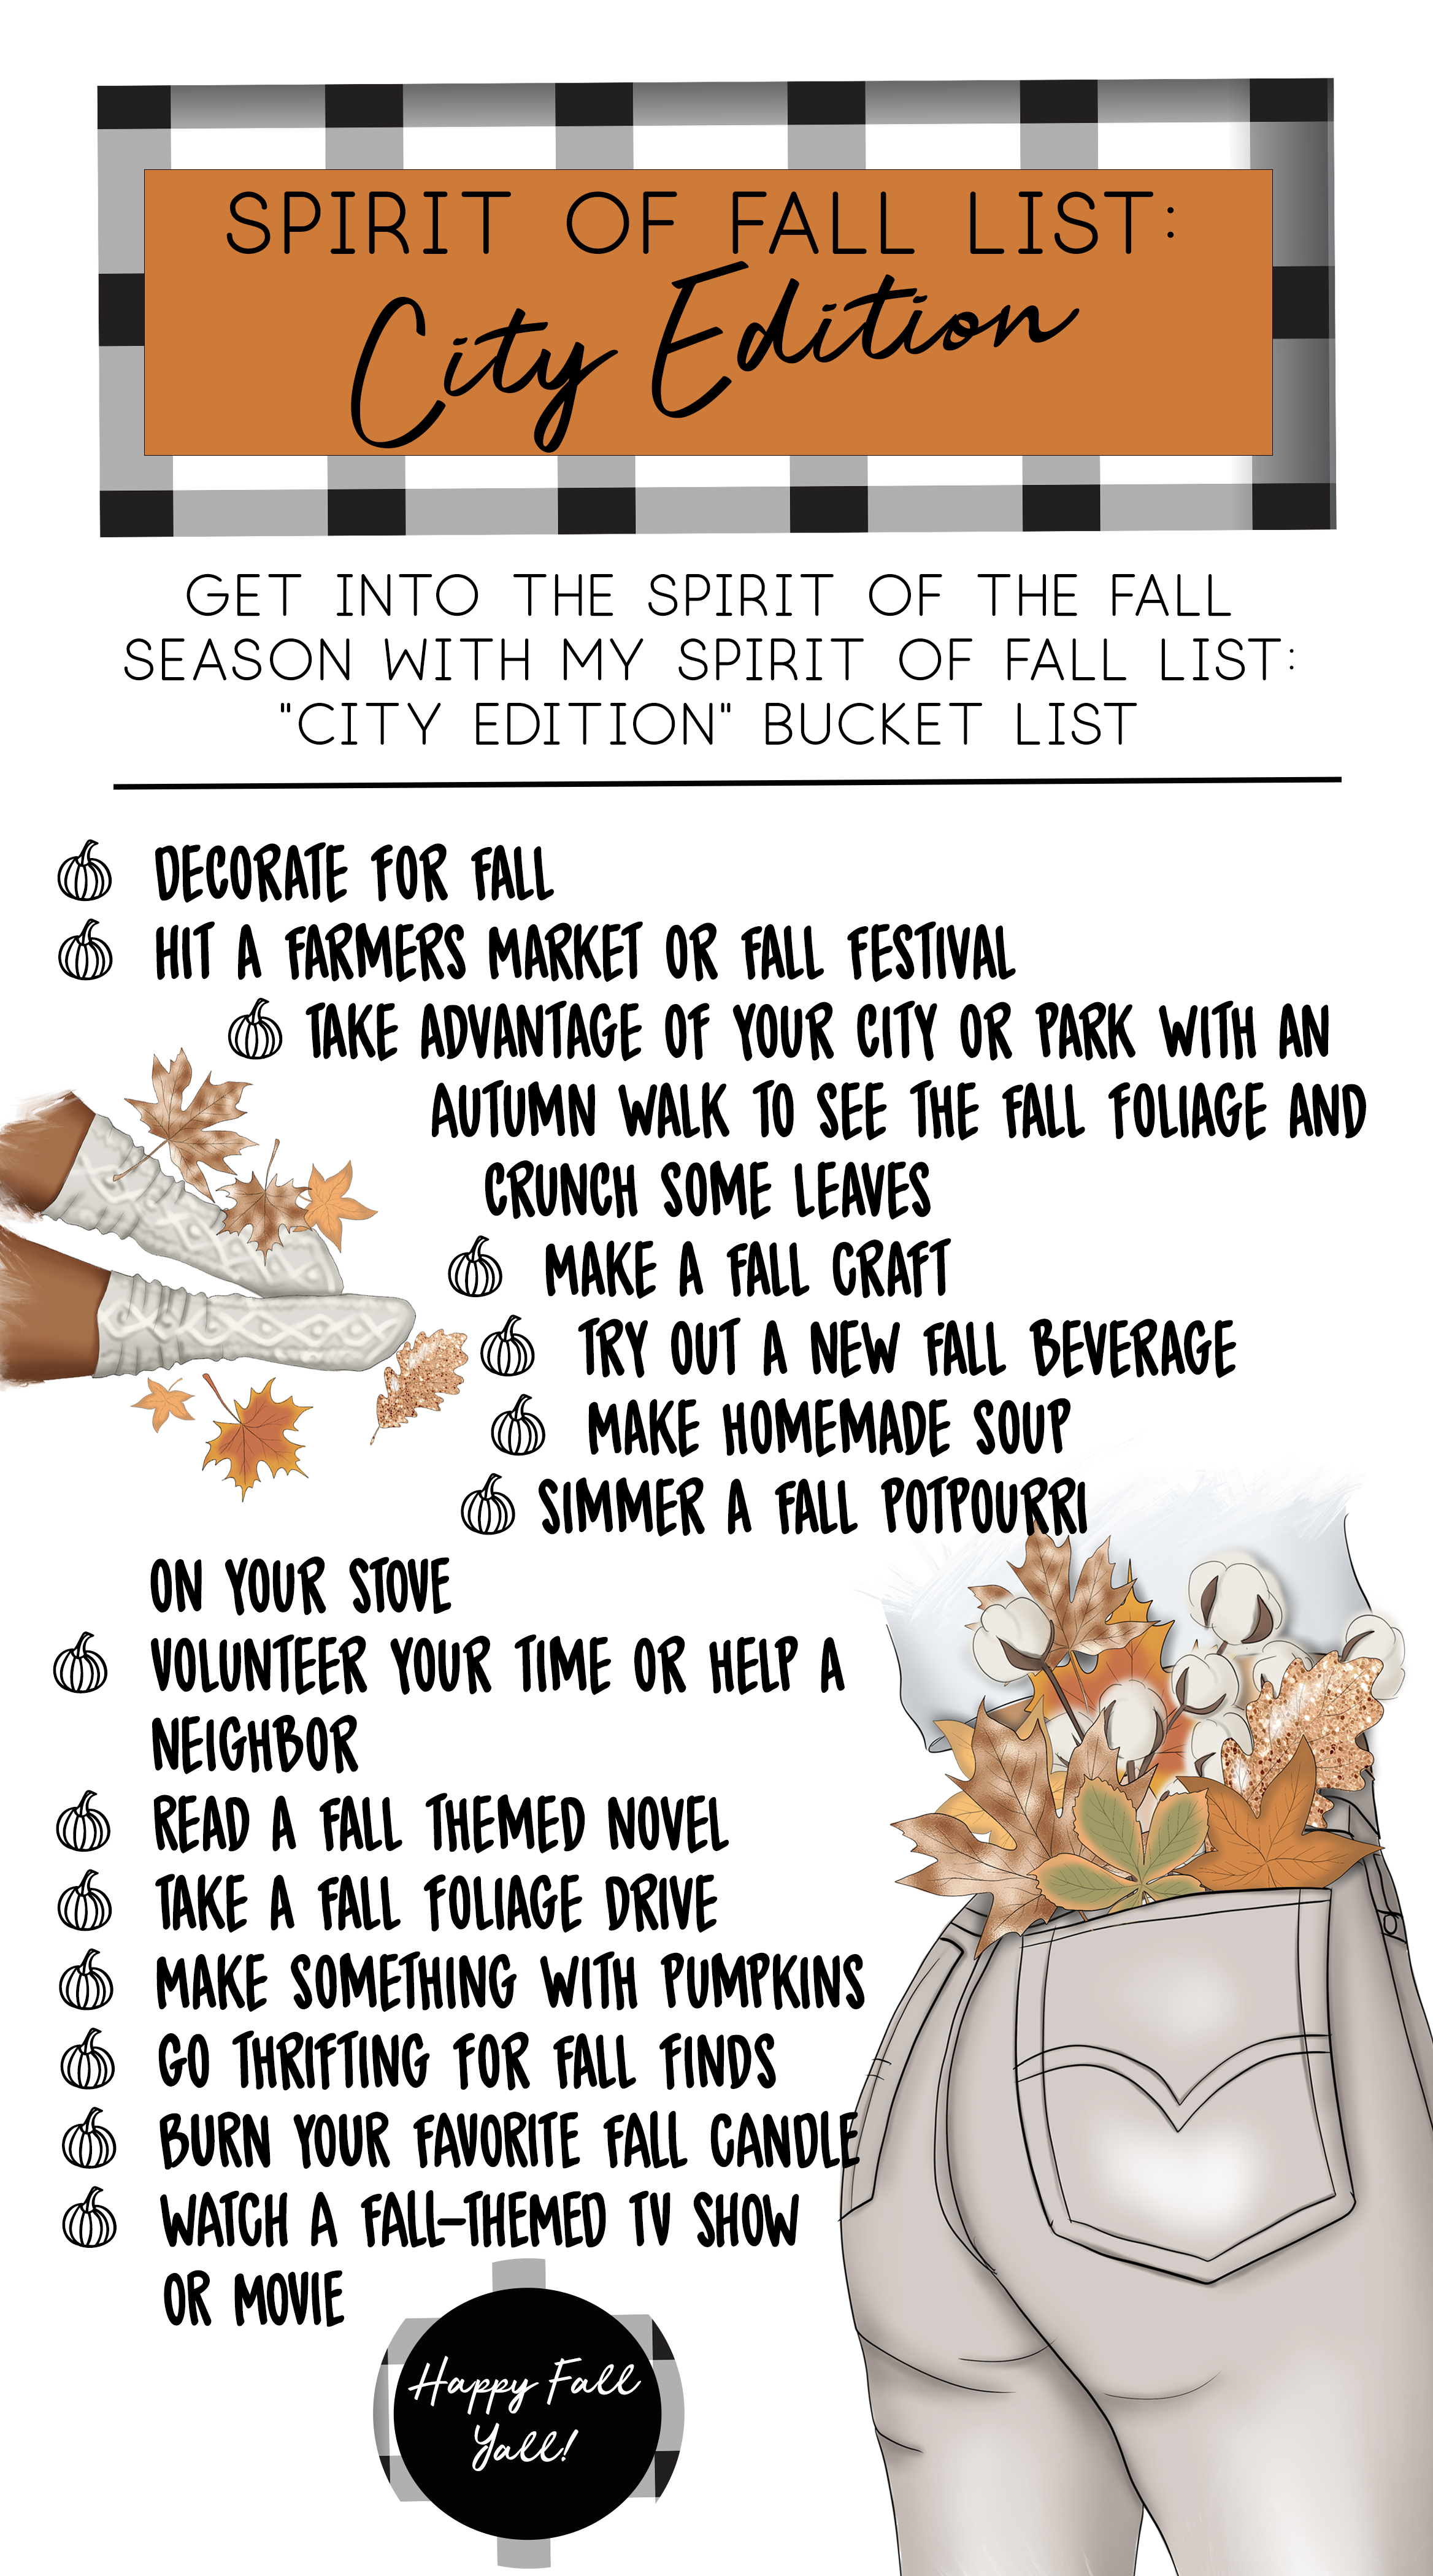 Spirit of Fall List City Edition